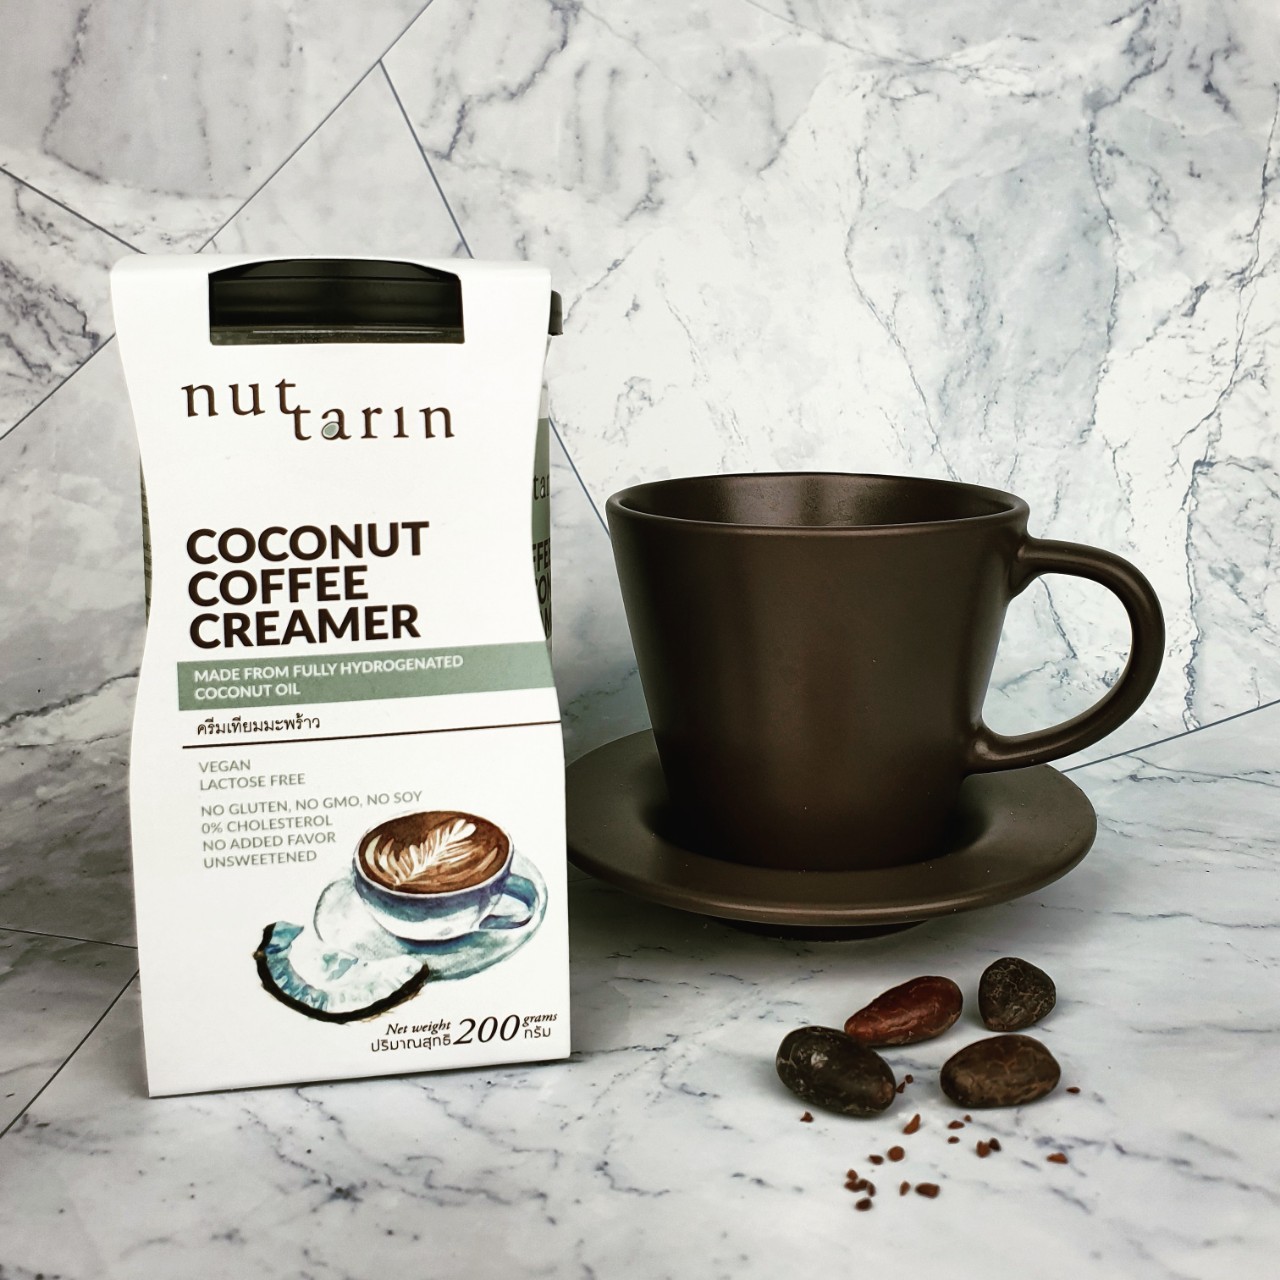 nuttarin coconut coffee creamer (vegan) ครีมเทียมมะพร้าว 200g